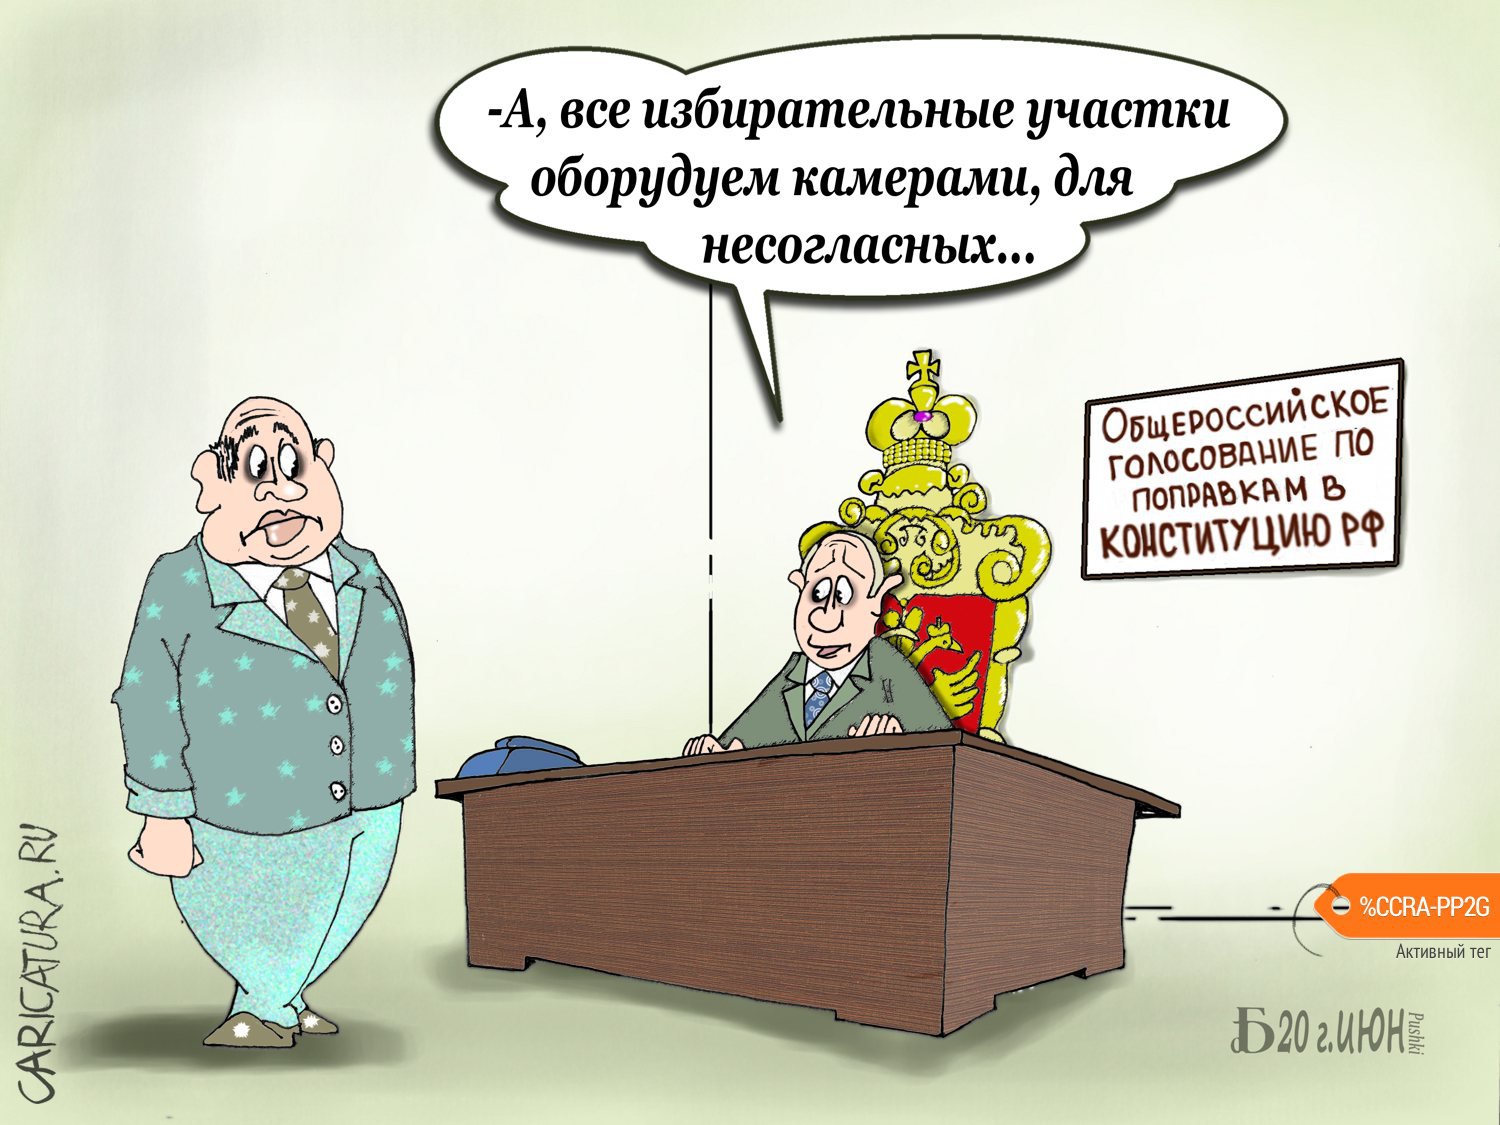 Карикатура "Про камеры и участки", Борис Демин